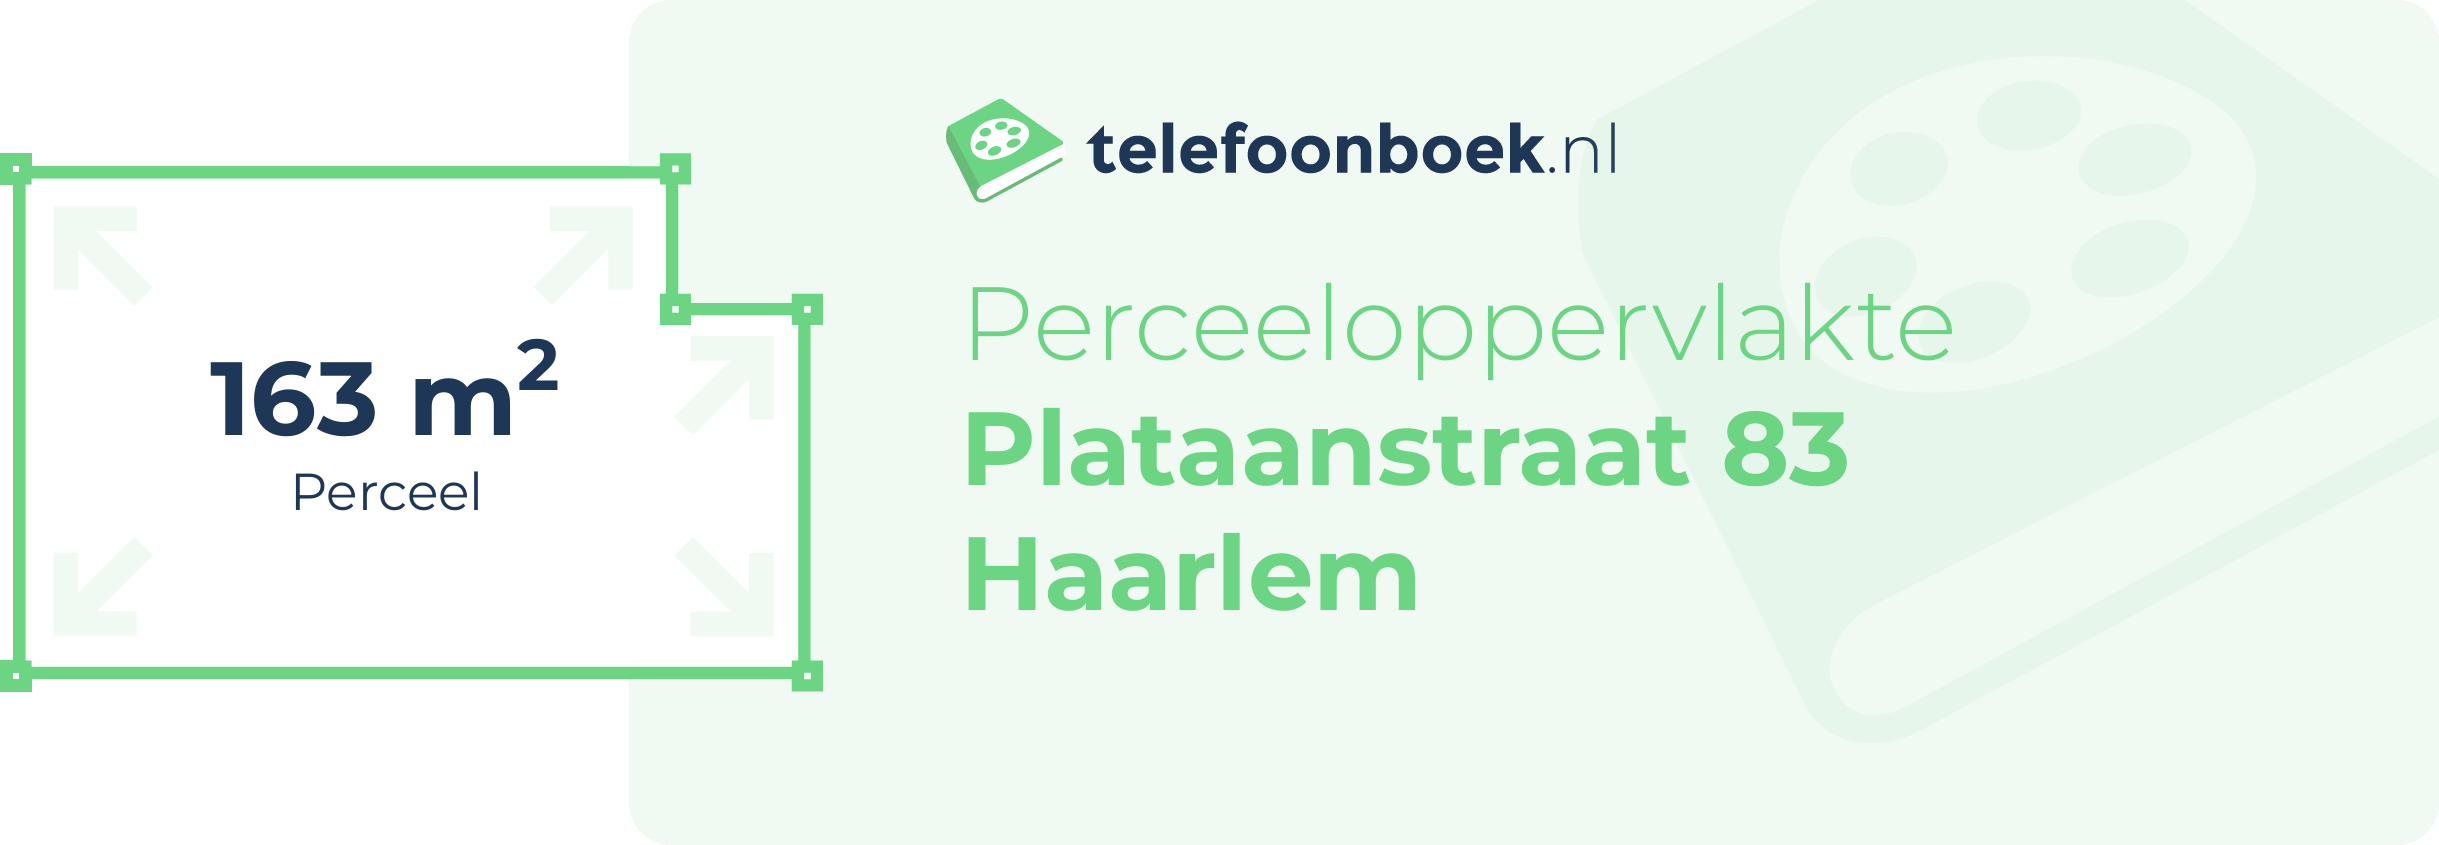 Perceeloppervlakte Plataanstraat 83 Haarlem